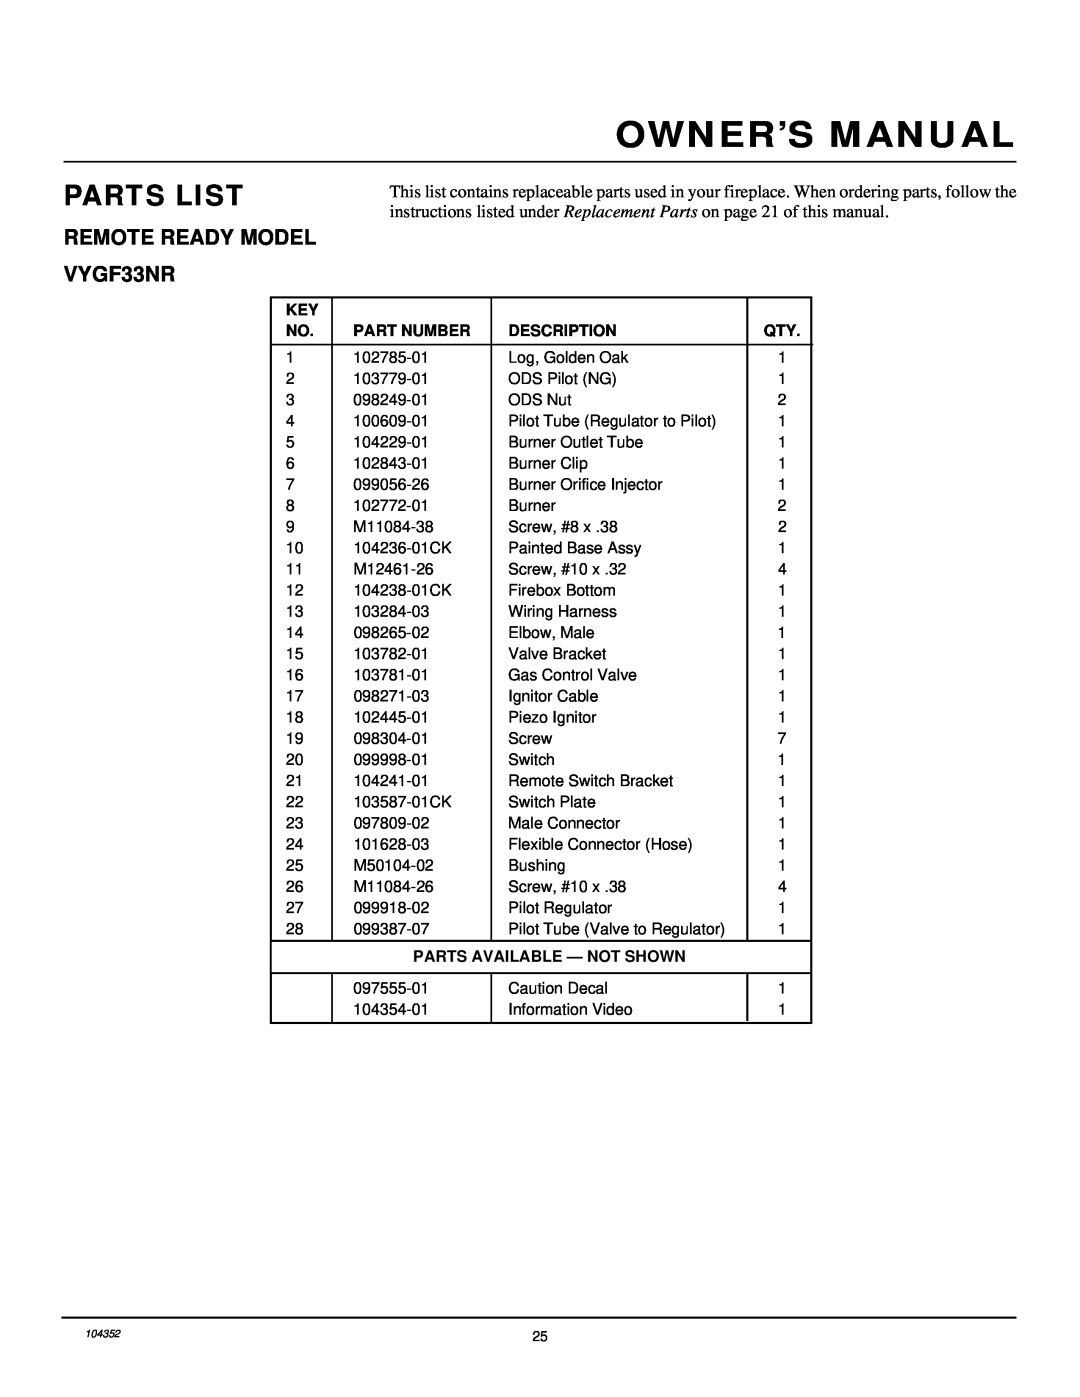 Desa installation manual Parts List, REMOTE READY MODEL VYGF33NR, Part Number, Description, Parts Available - Not Shown 